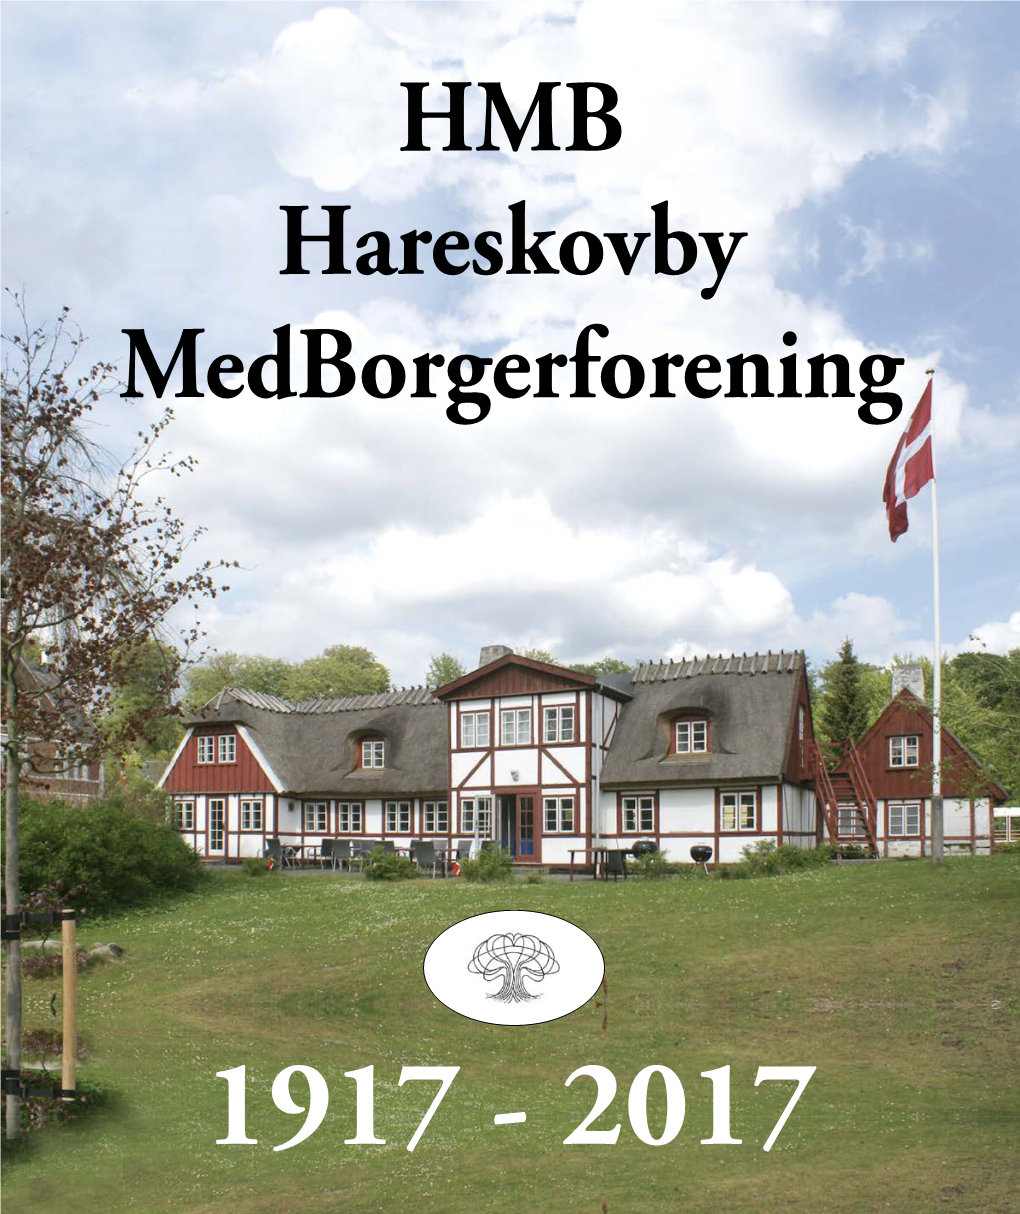 HMB Hareskovby Medborgerforening